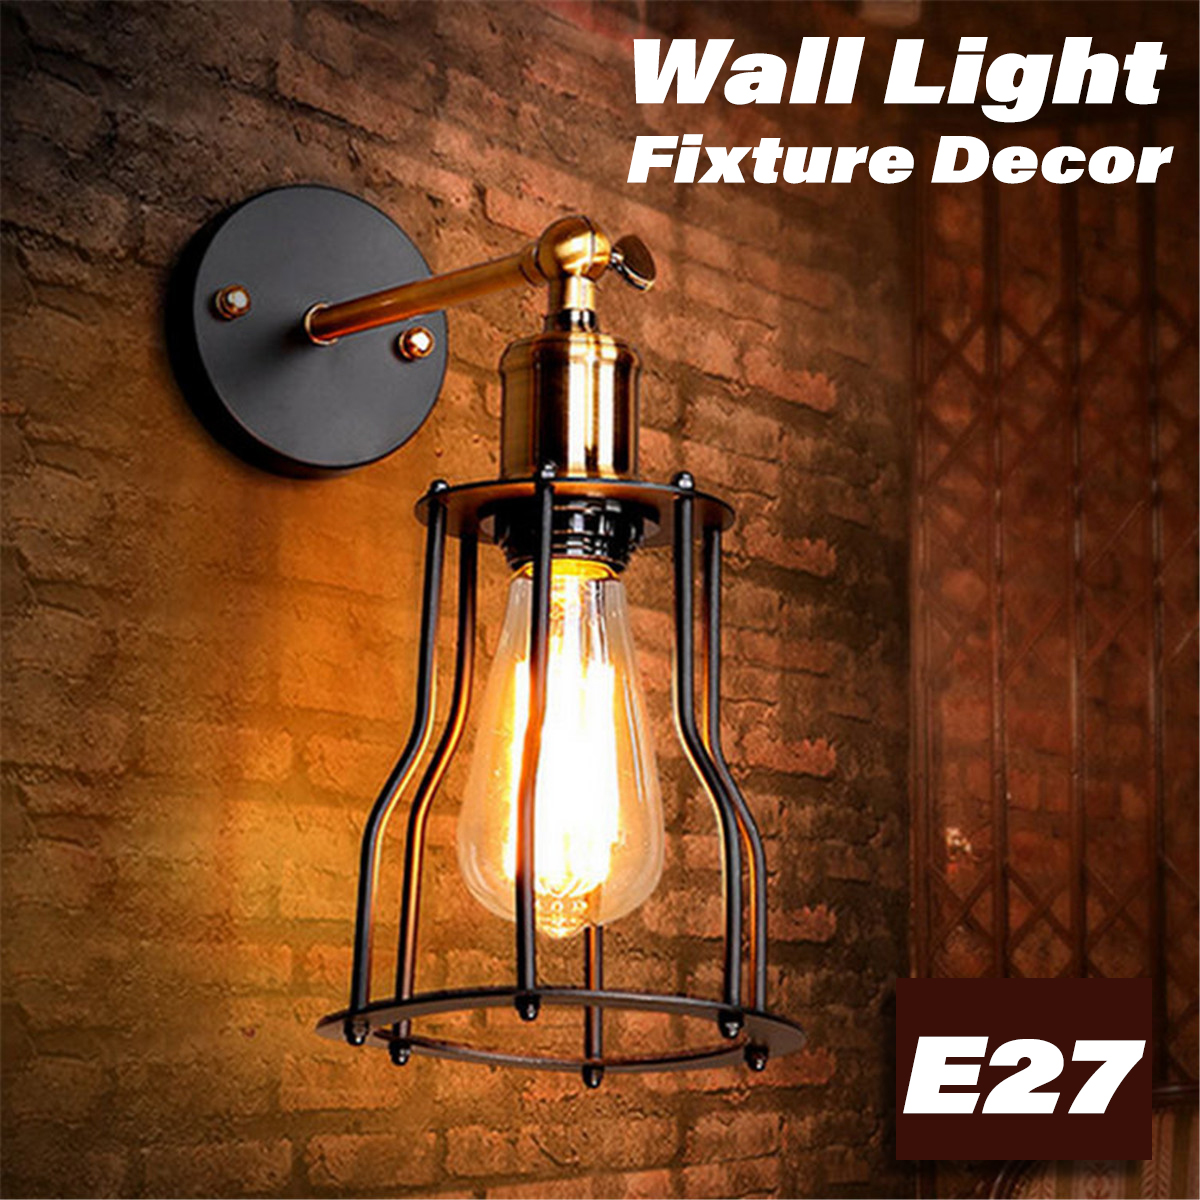 E27-Vintage-Wall-Light-Home-Bar-Sconce-Lamp-Corridor-Fixture-Decoration-AC85-265V-1706672-1